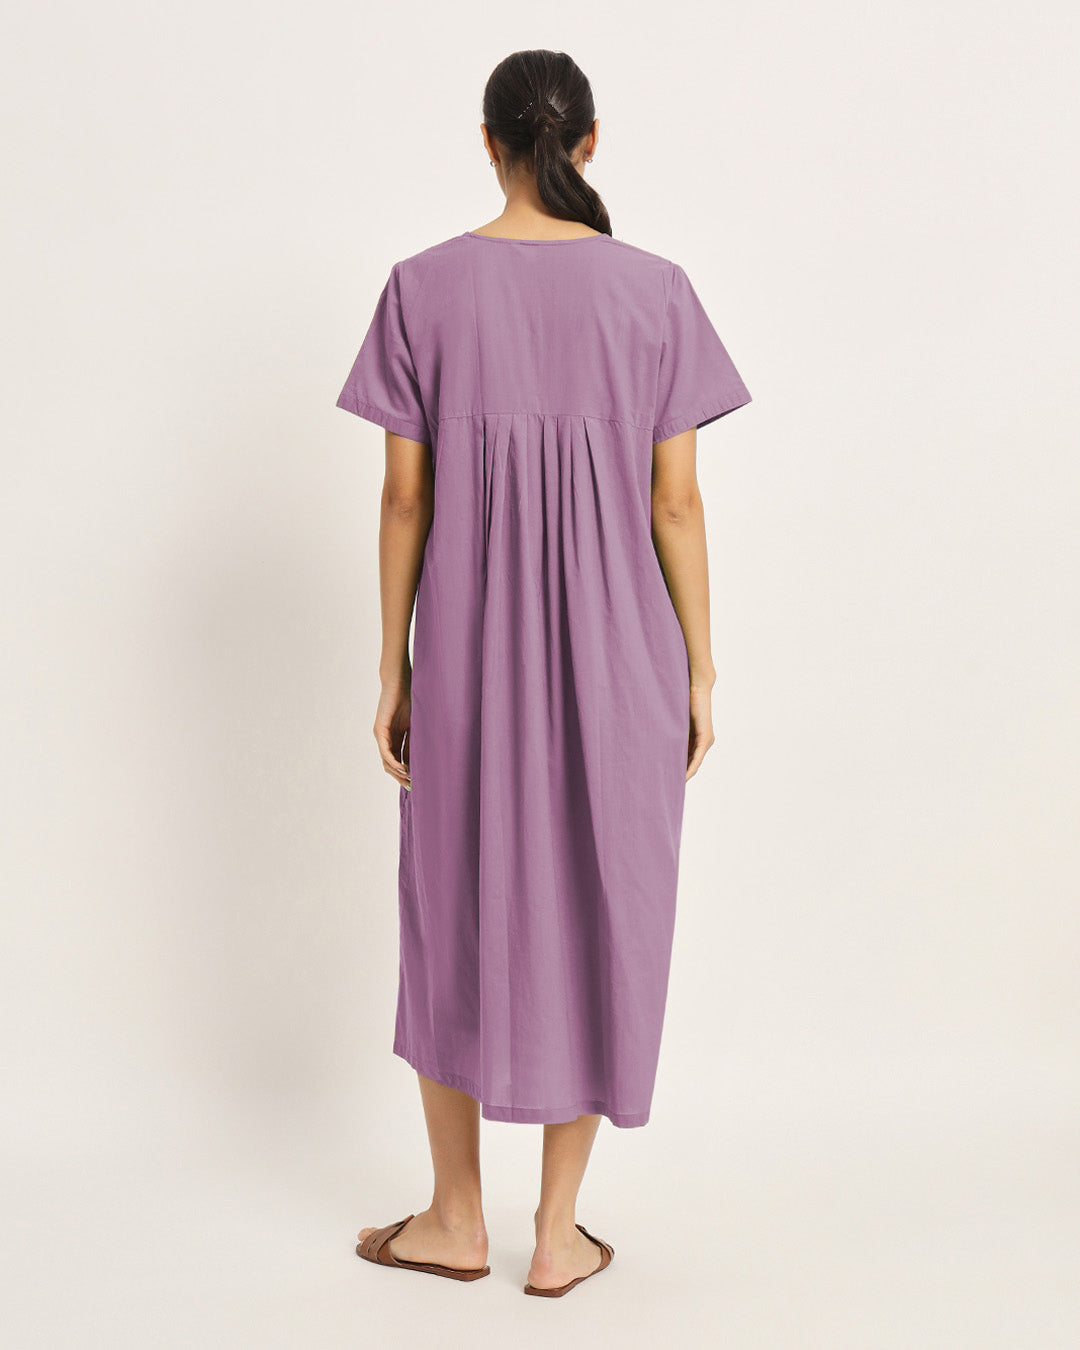 Combo: Iris Pink & Lilac Bump Blessing Maternity & Nursing Dress - Set of 2